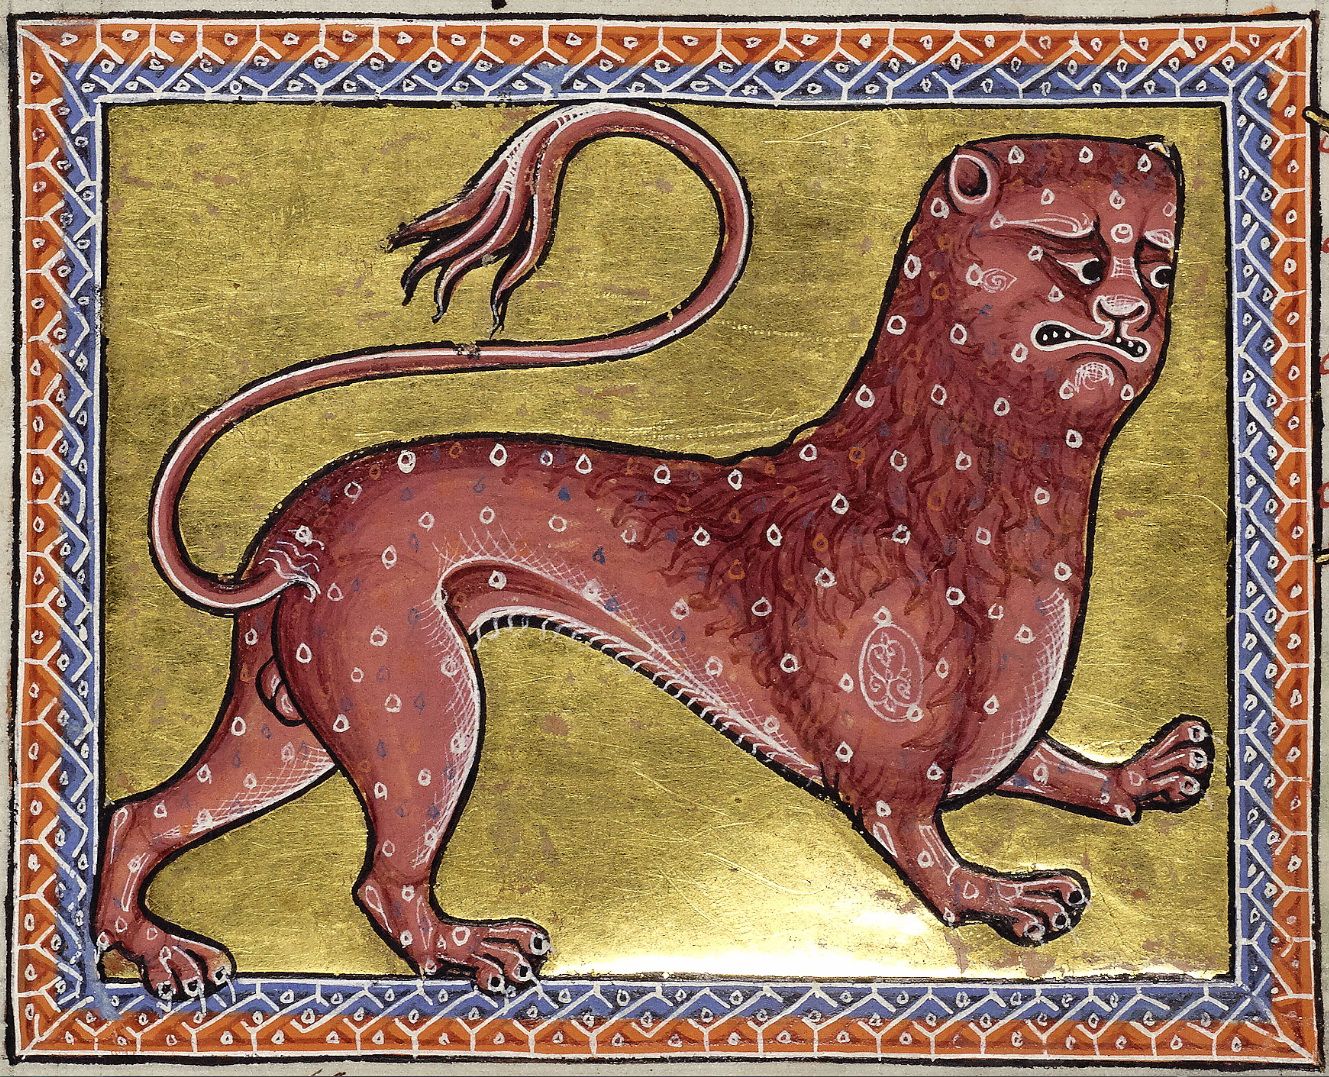 medieval illustration of a pard